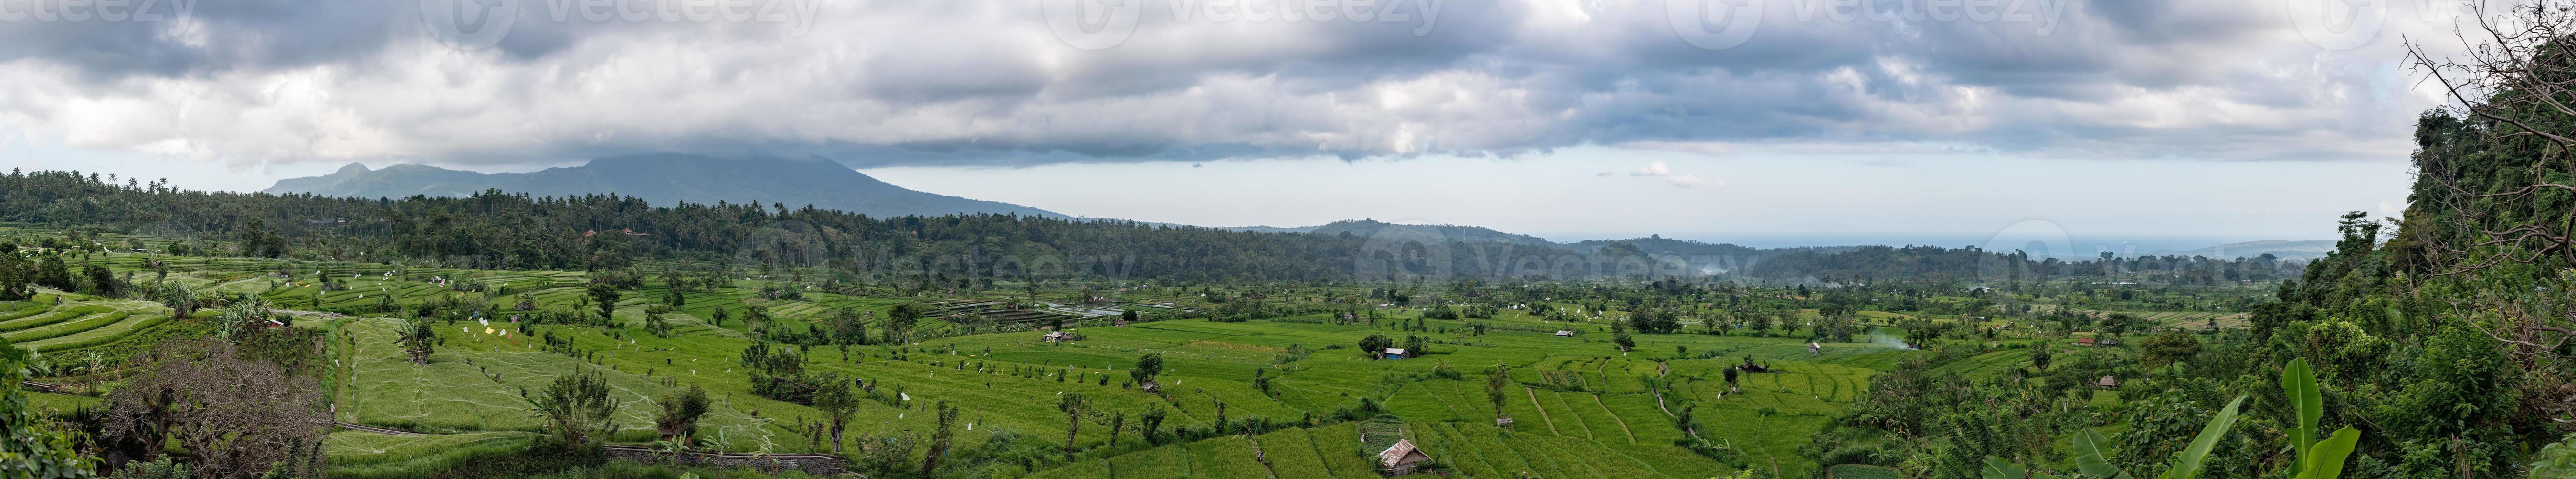 bali ris fält enorm panorama landskap affisch se foto